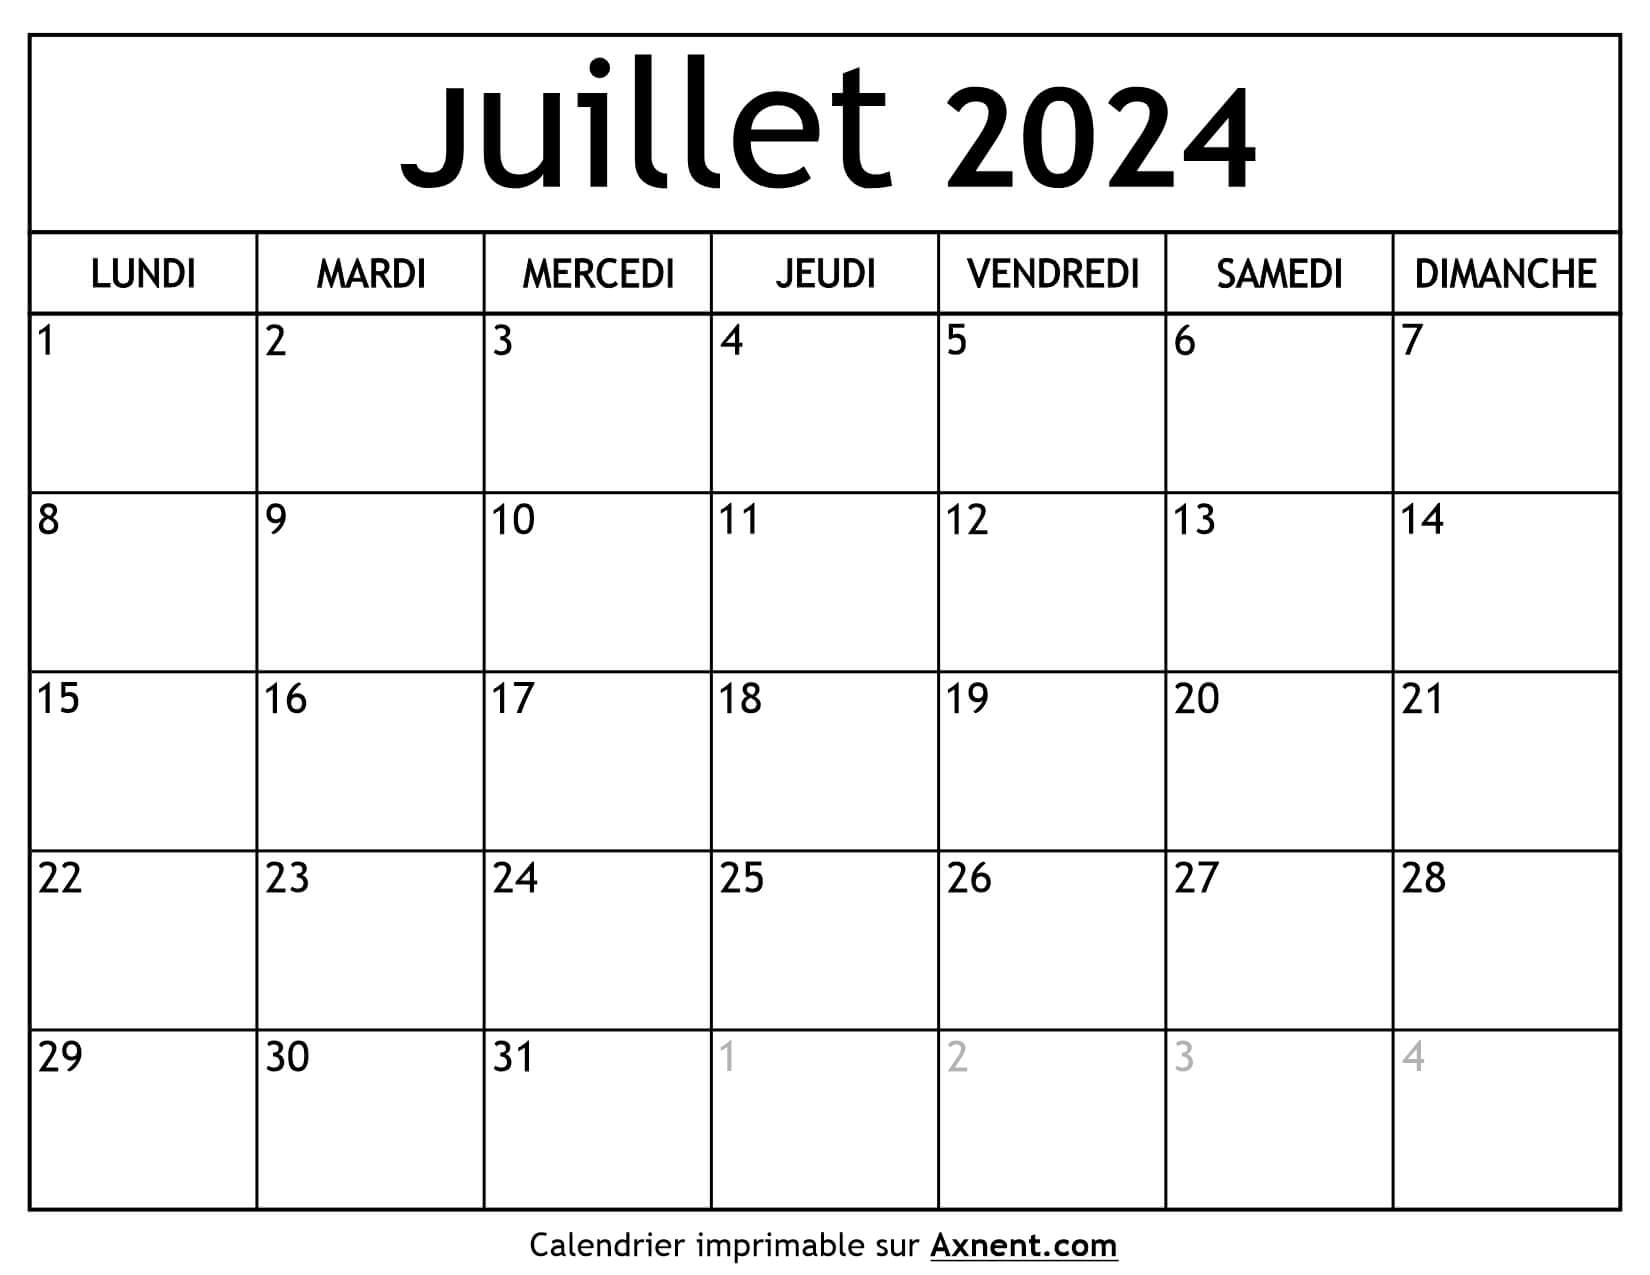 Calendrier Juillet 2024 à Imprimer - Time Management Tools By Axnent